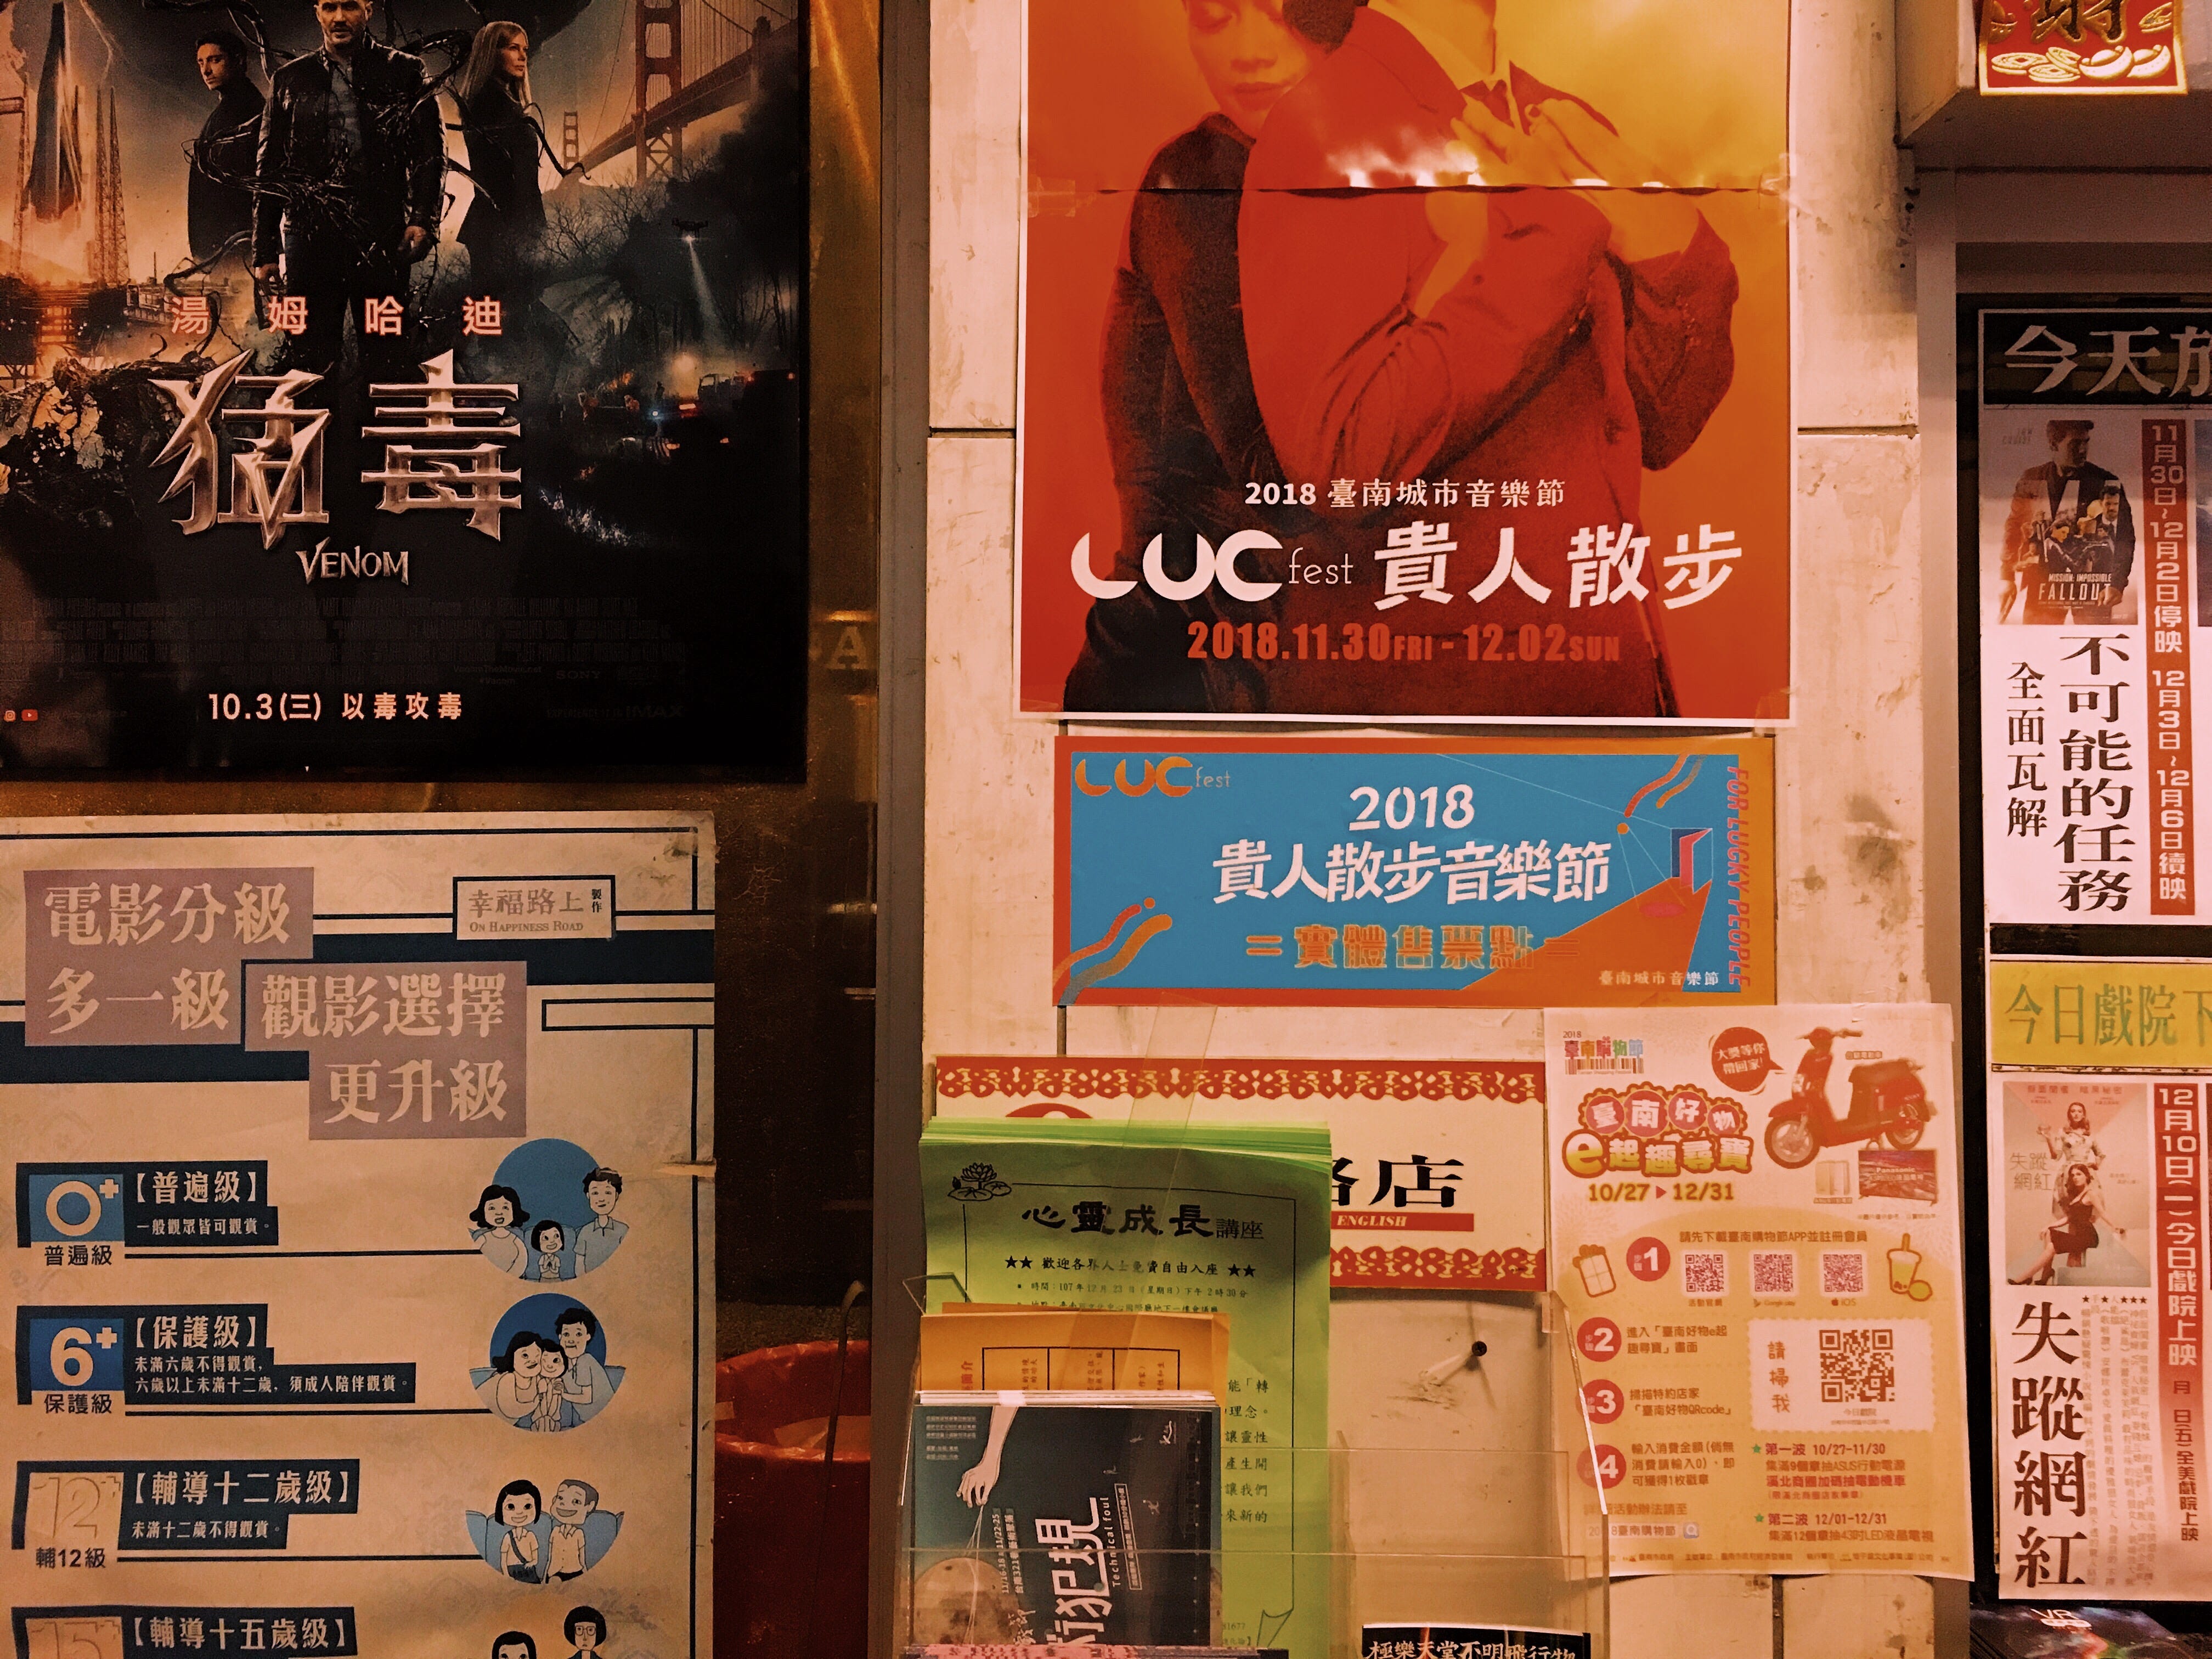 Taiwan’s LUCfest 2018: A Soul Connection